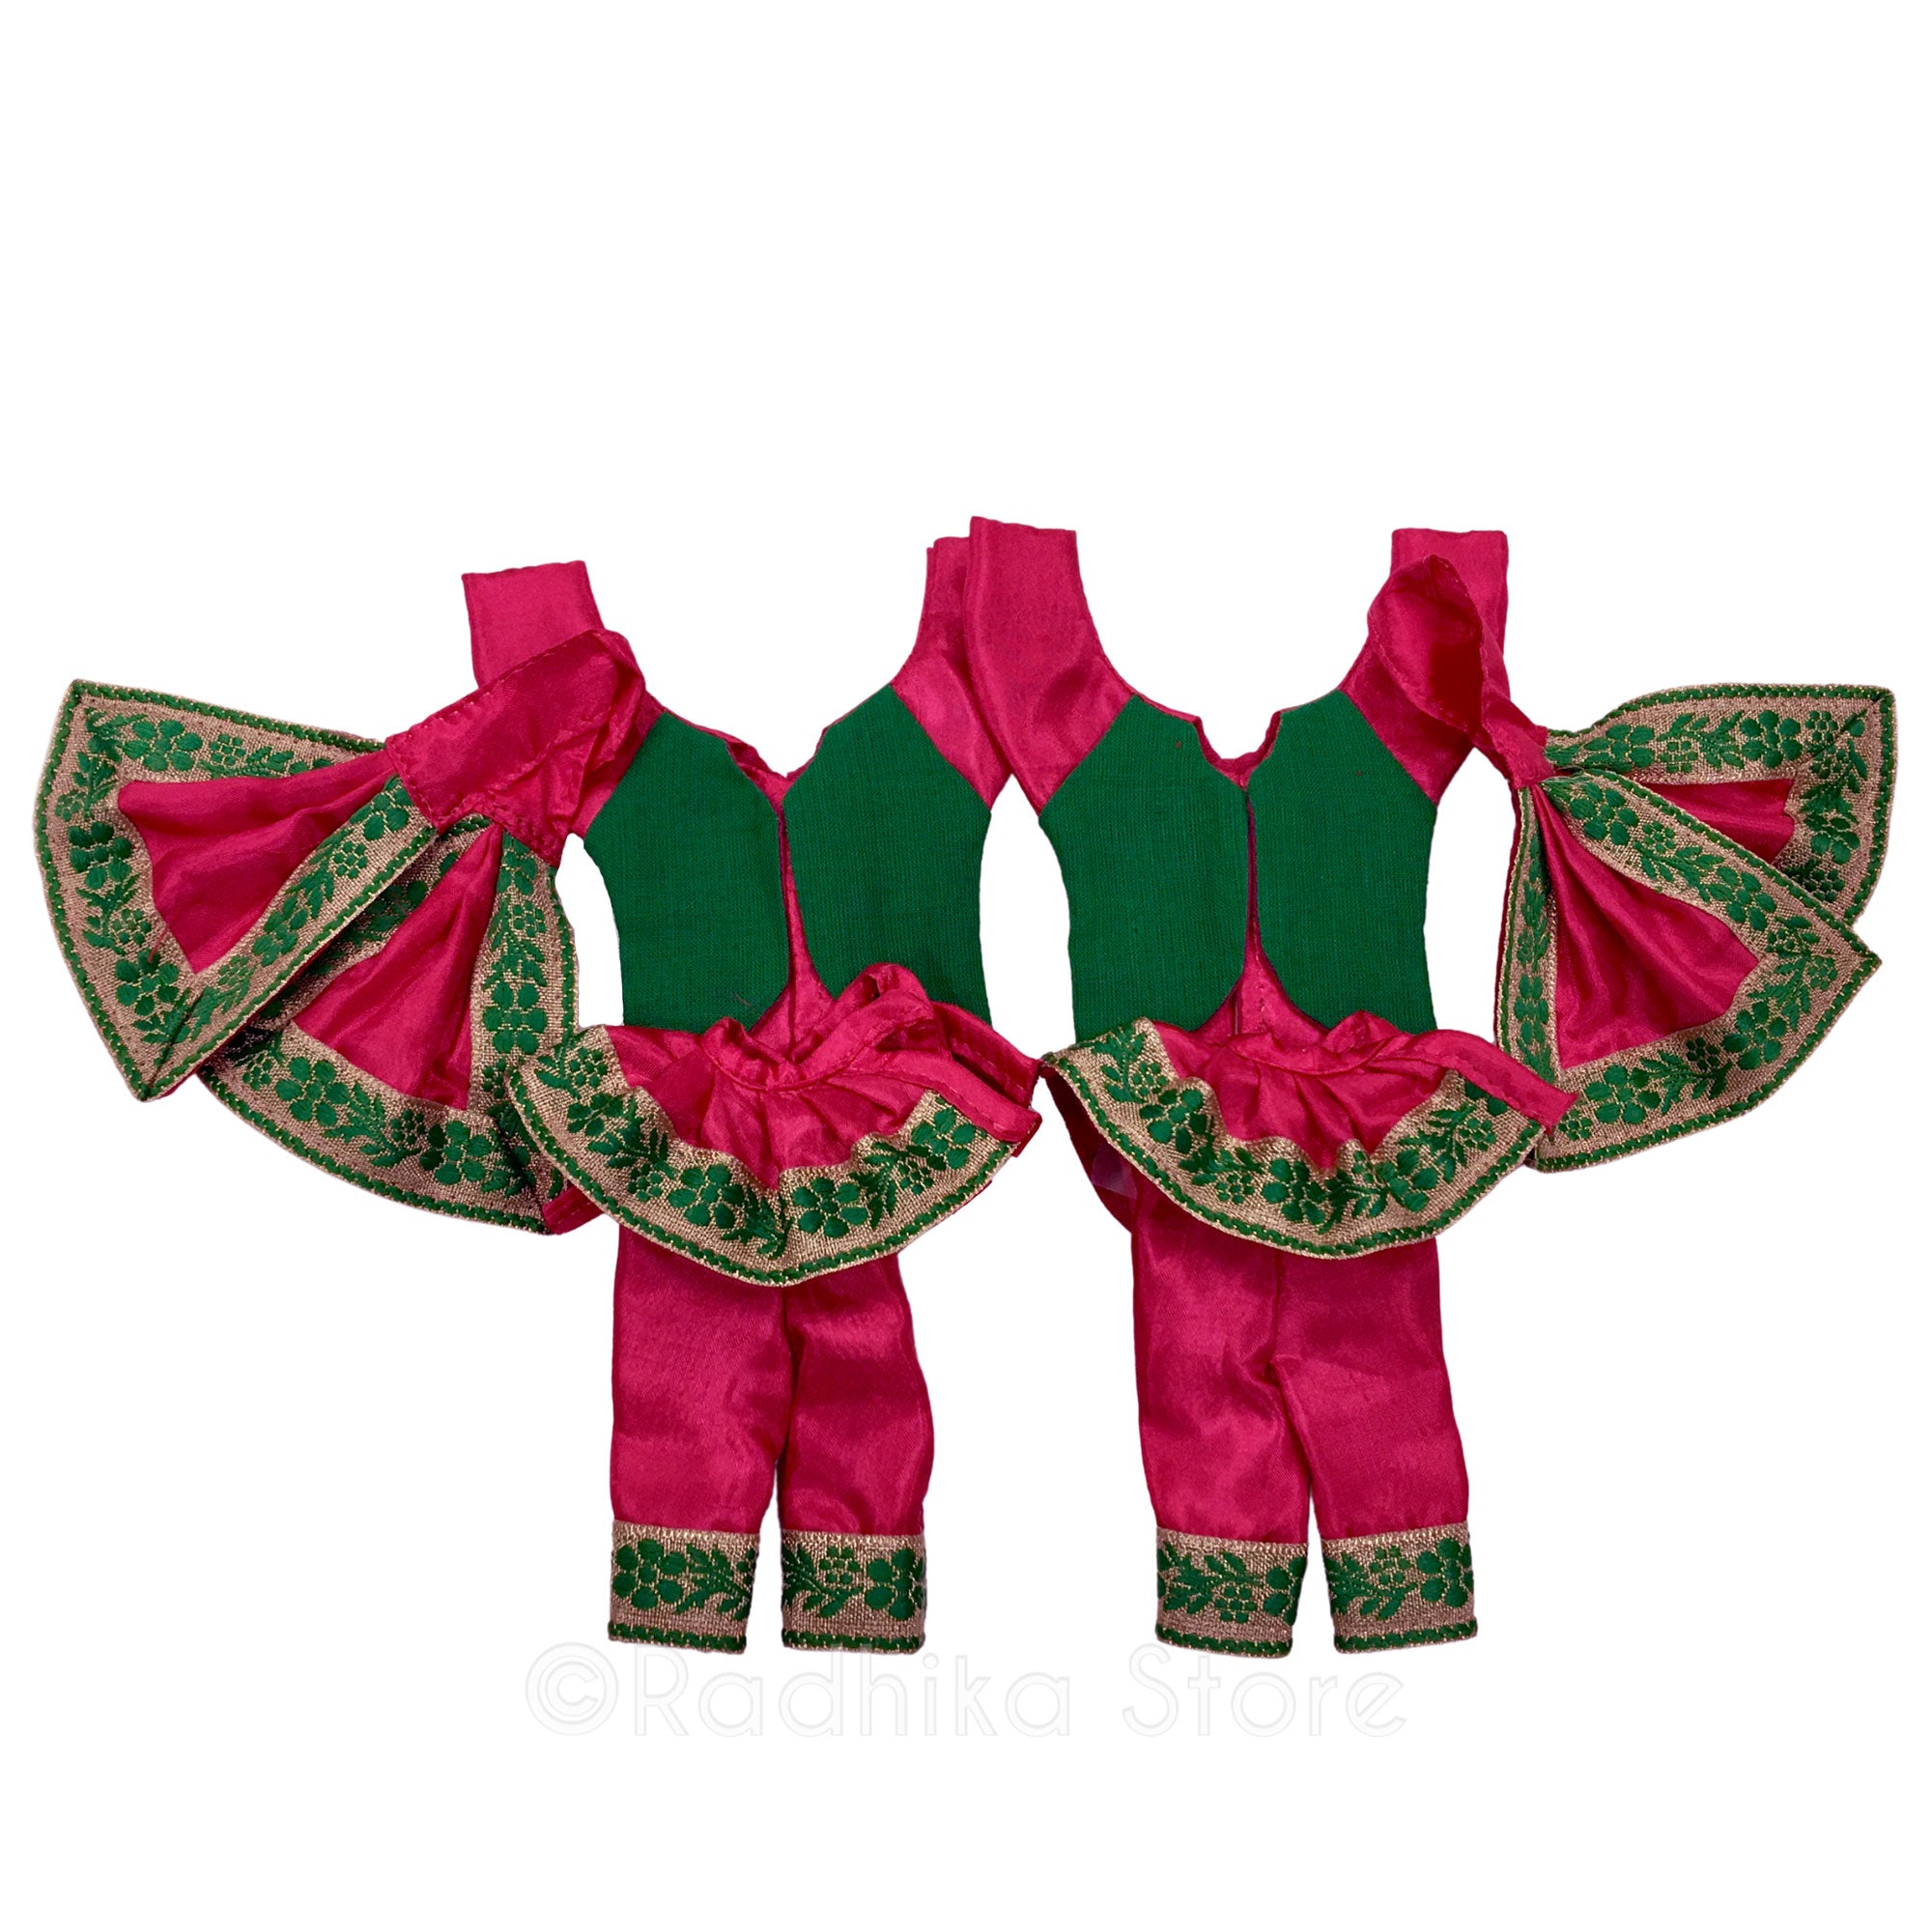 Braja Style - Cranberry and Green - Gaura Nitai Deity Outfit